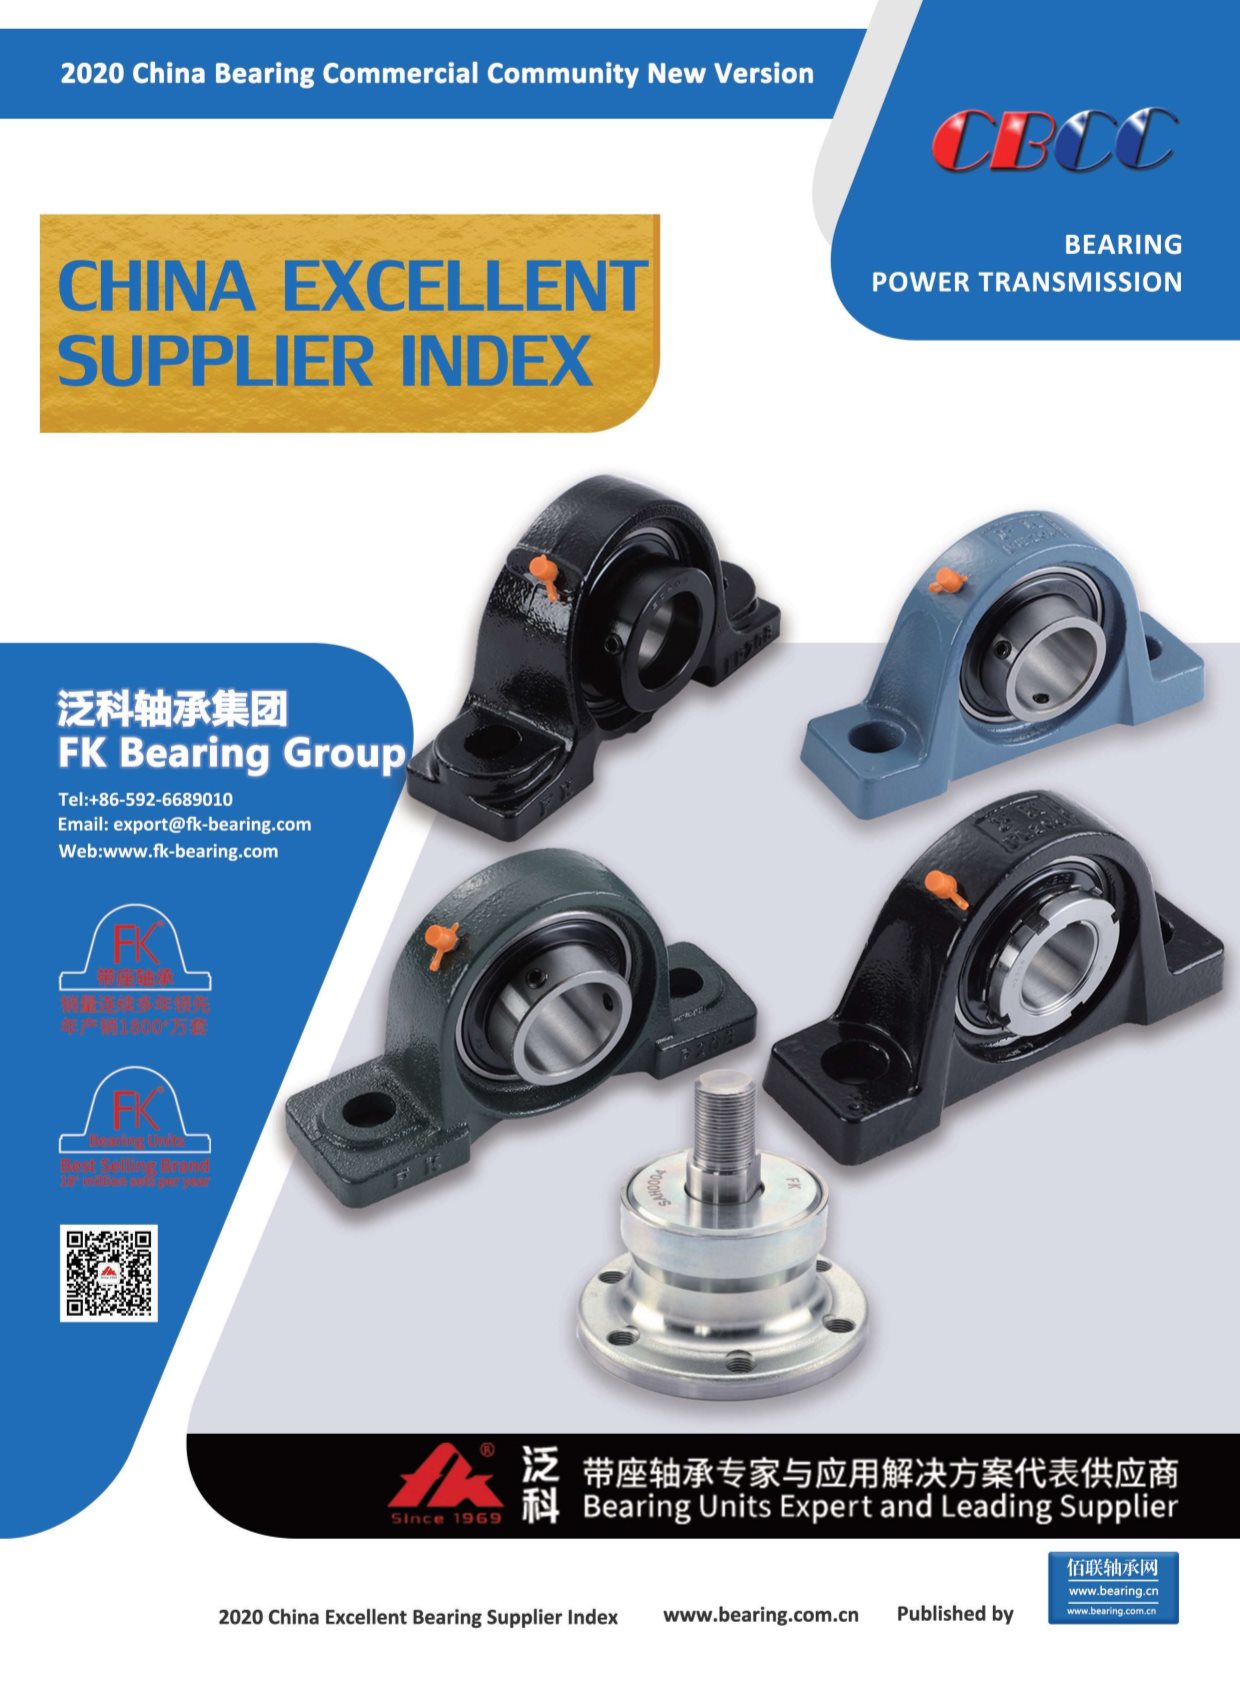 2020 China Excellent Supplier Index Brochure